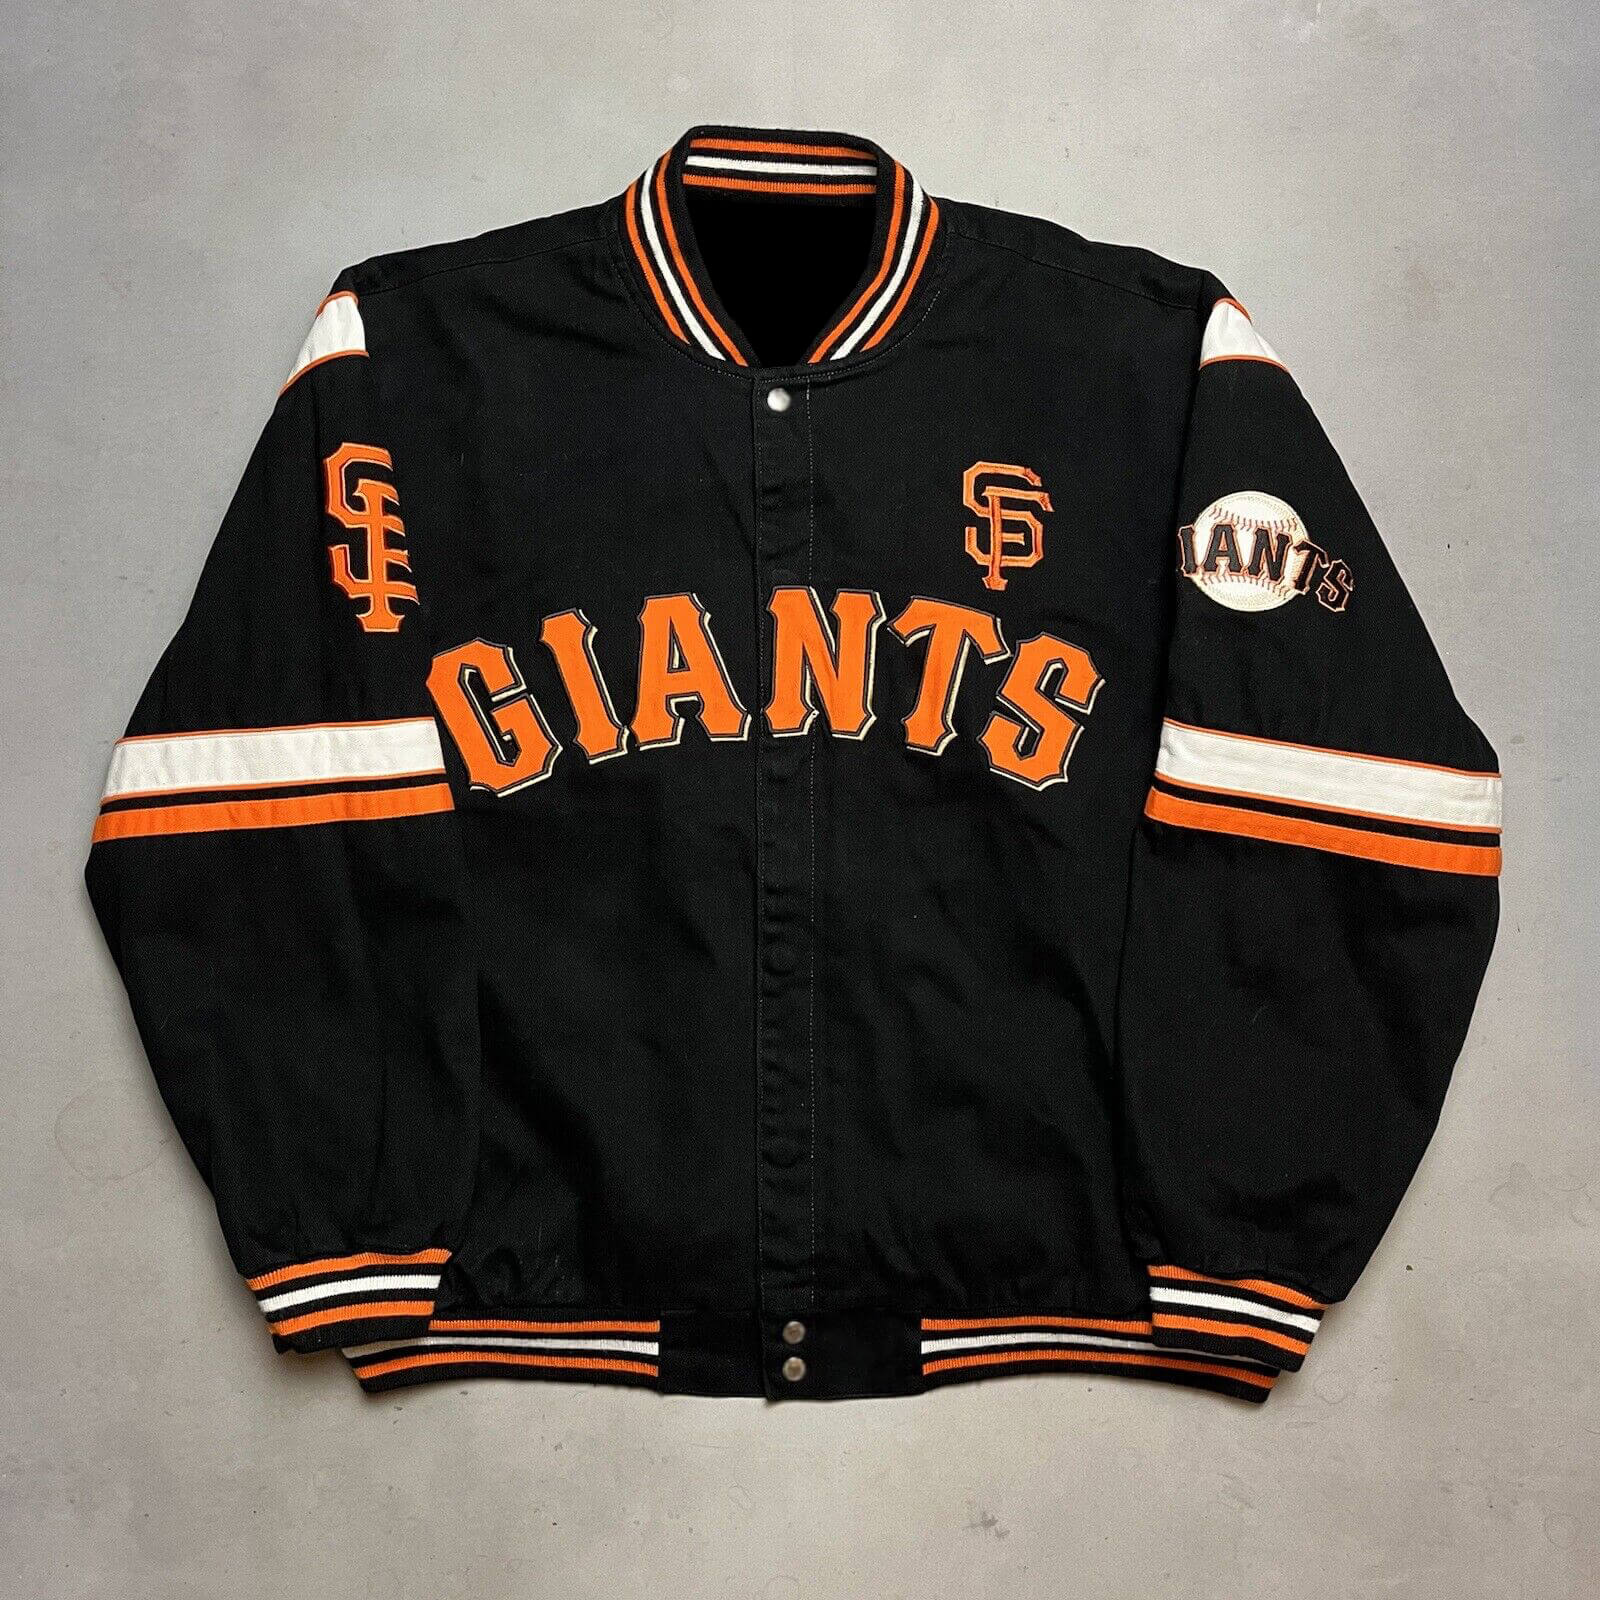 SF Giants Black and White Varsity Jacket